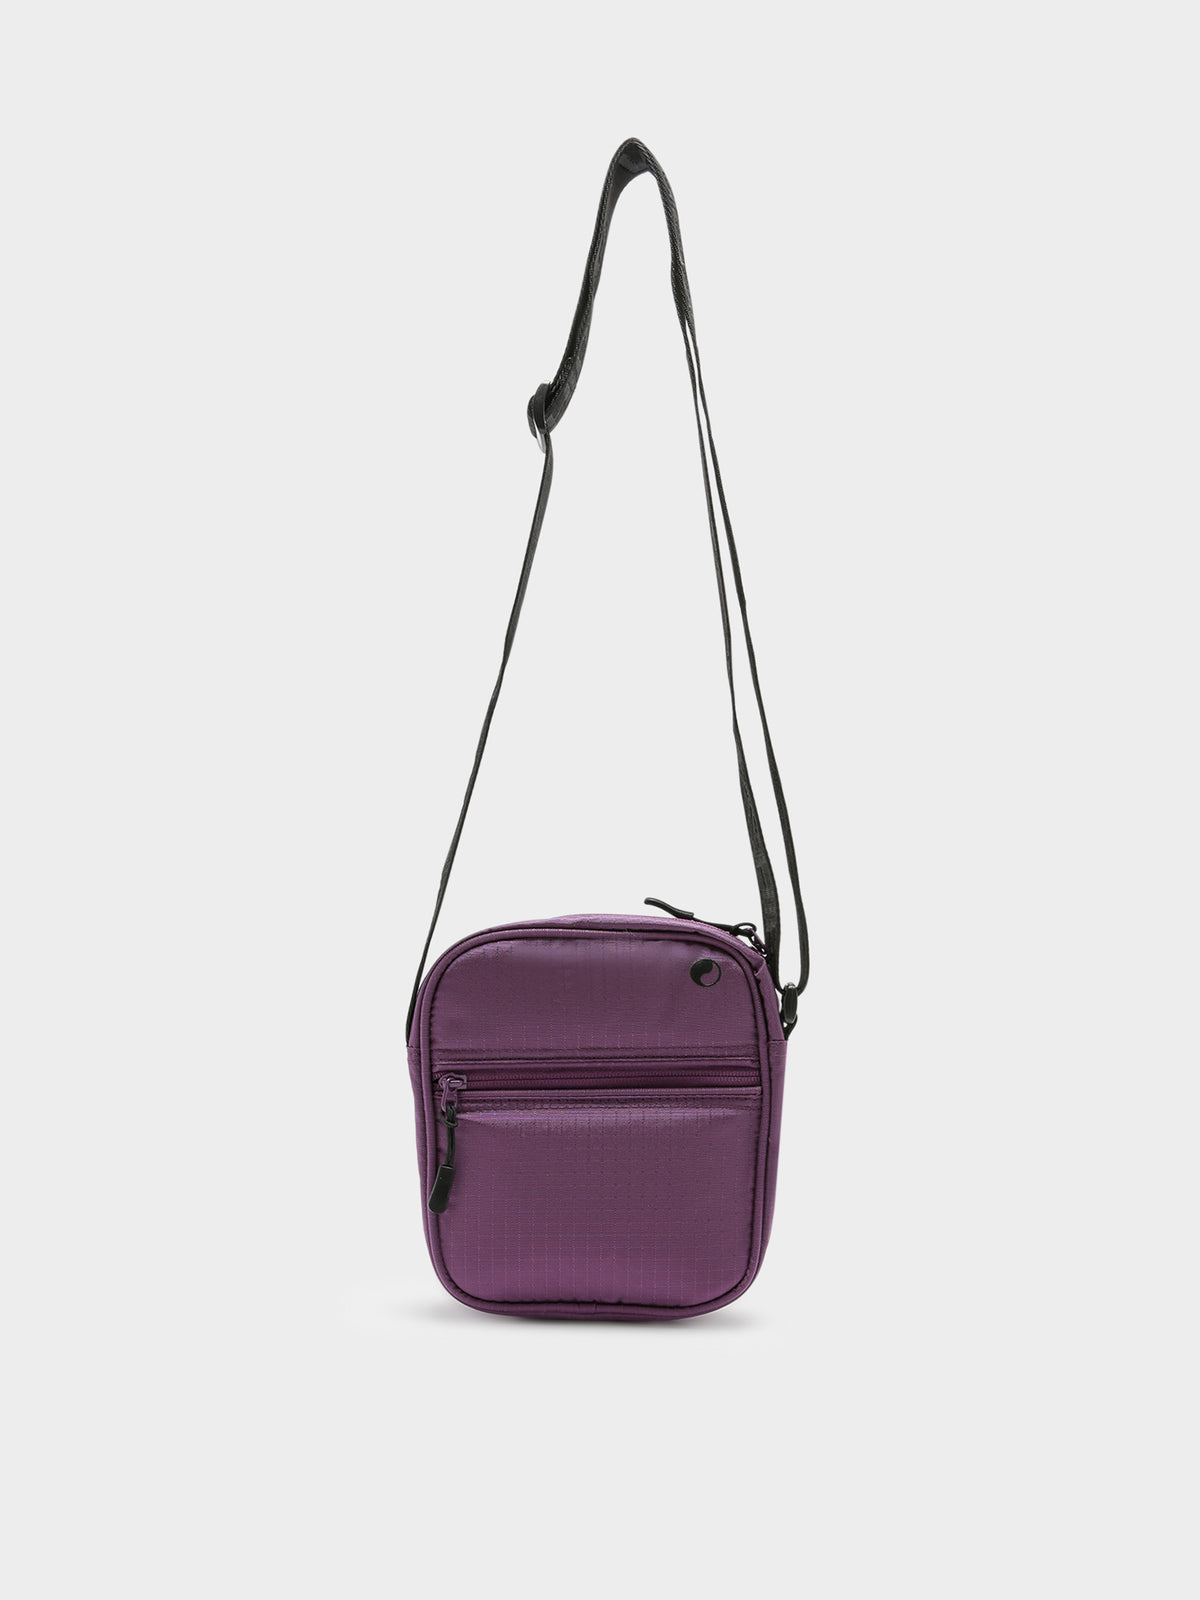 Vino Shoulder Bag in Grape